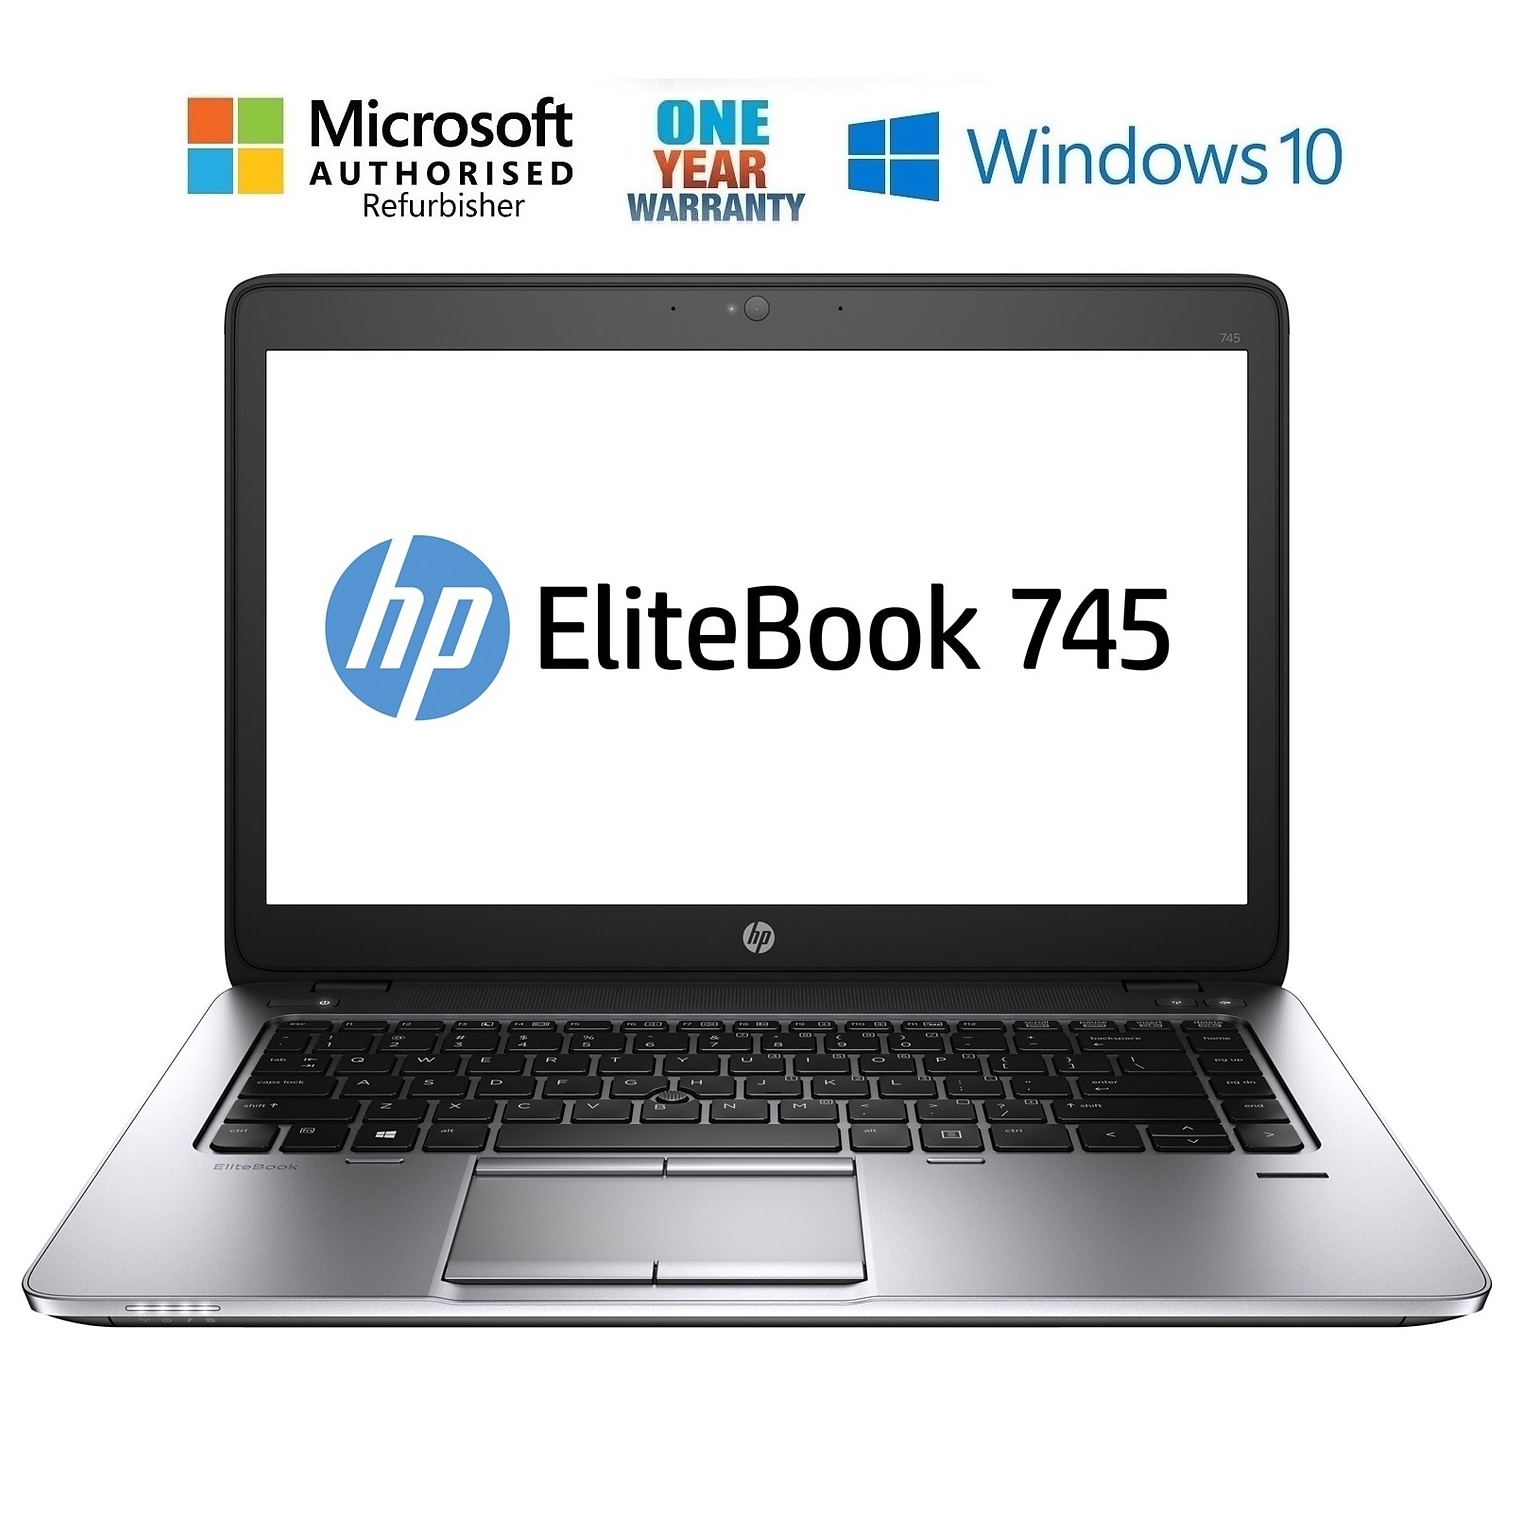 HP EliteBook 745 G2, 14 Refurbished Laptop, AMD A6 7050B 2.2GHz Processor, 8 GB Memory, 128GB SSD, Windows 10